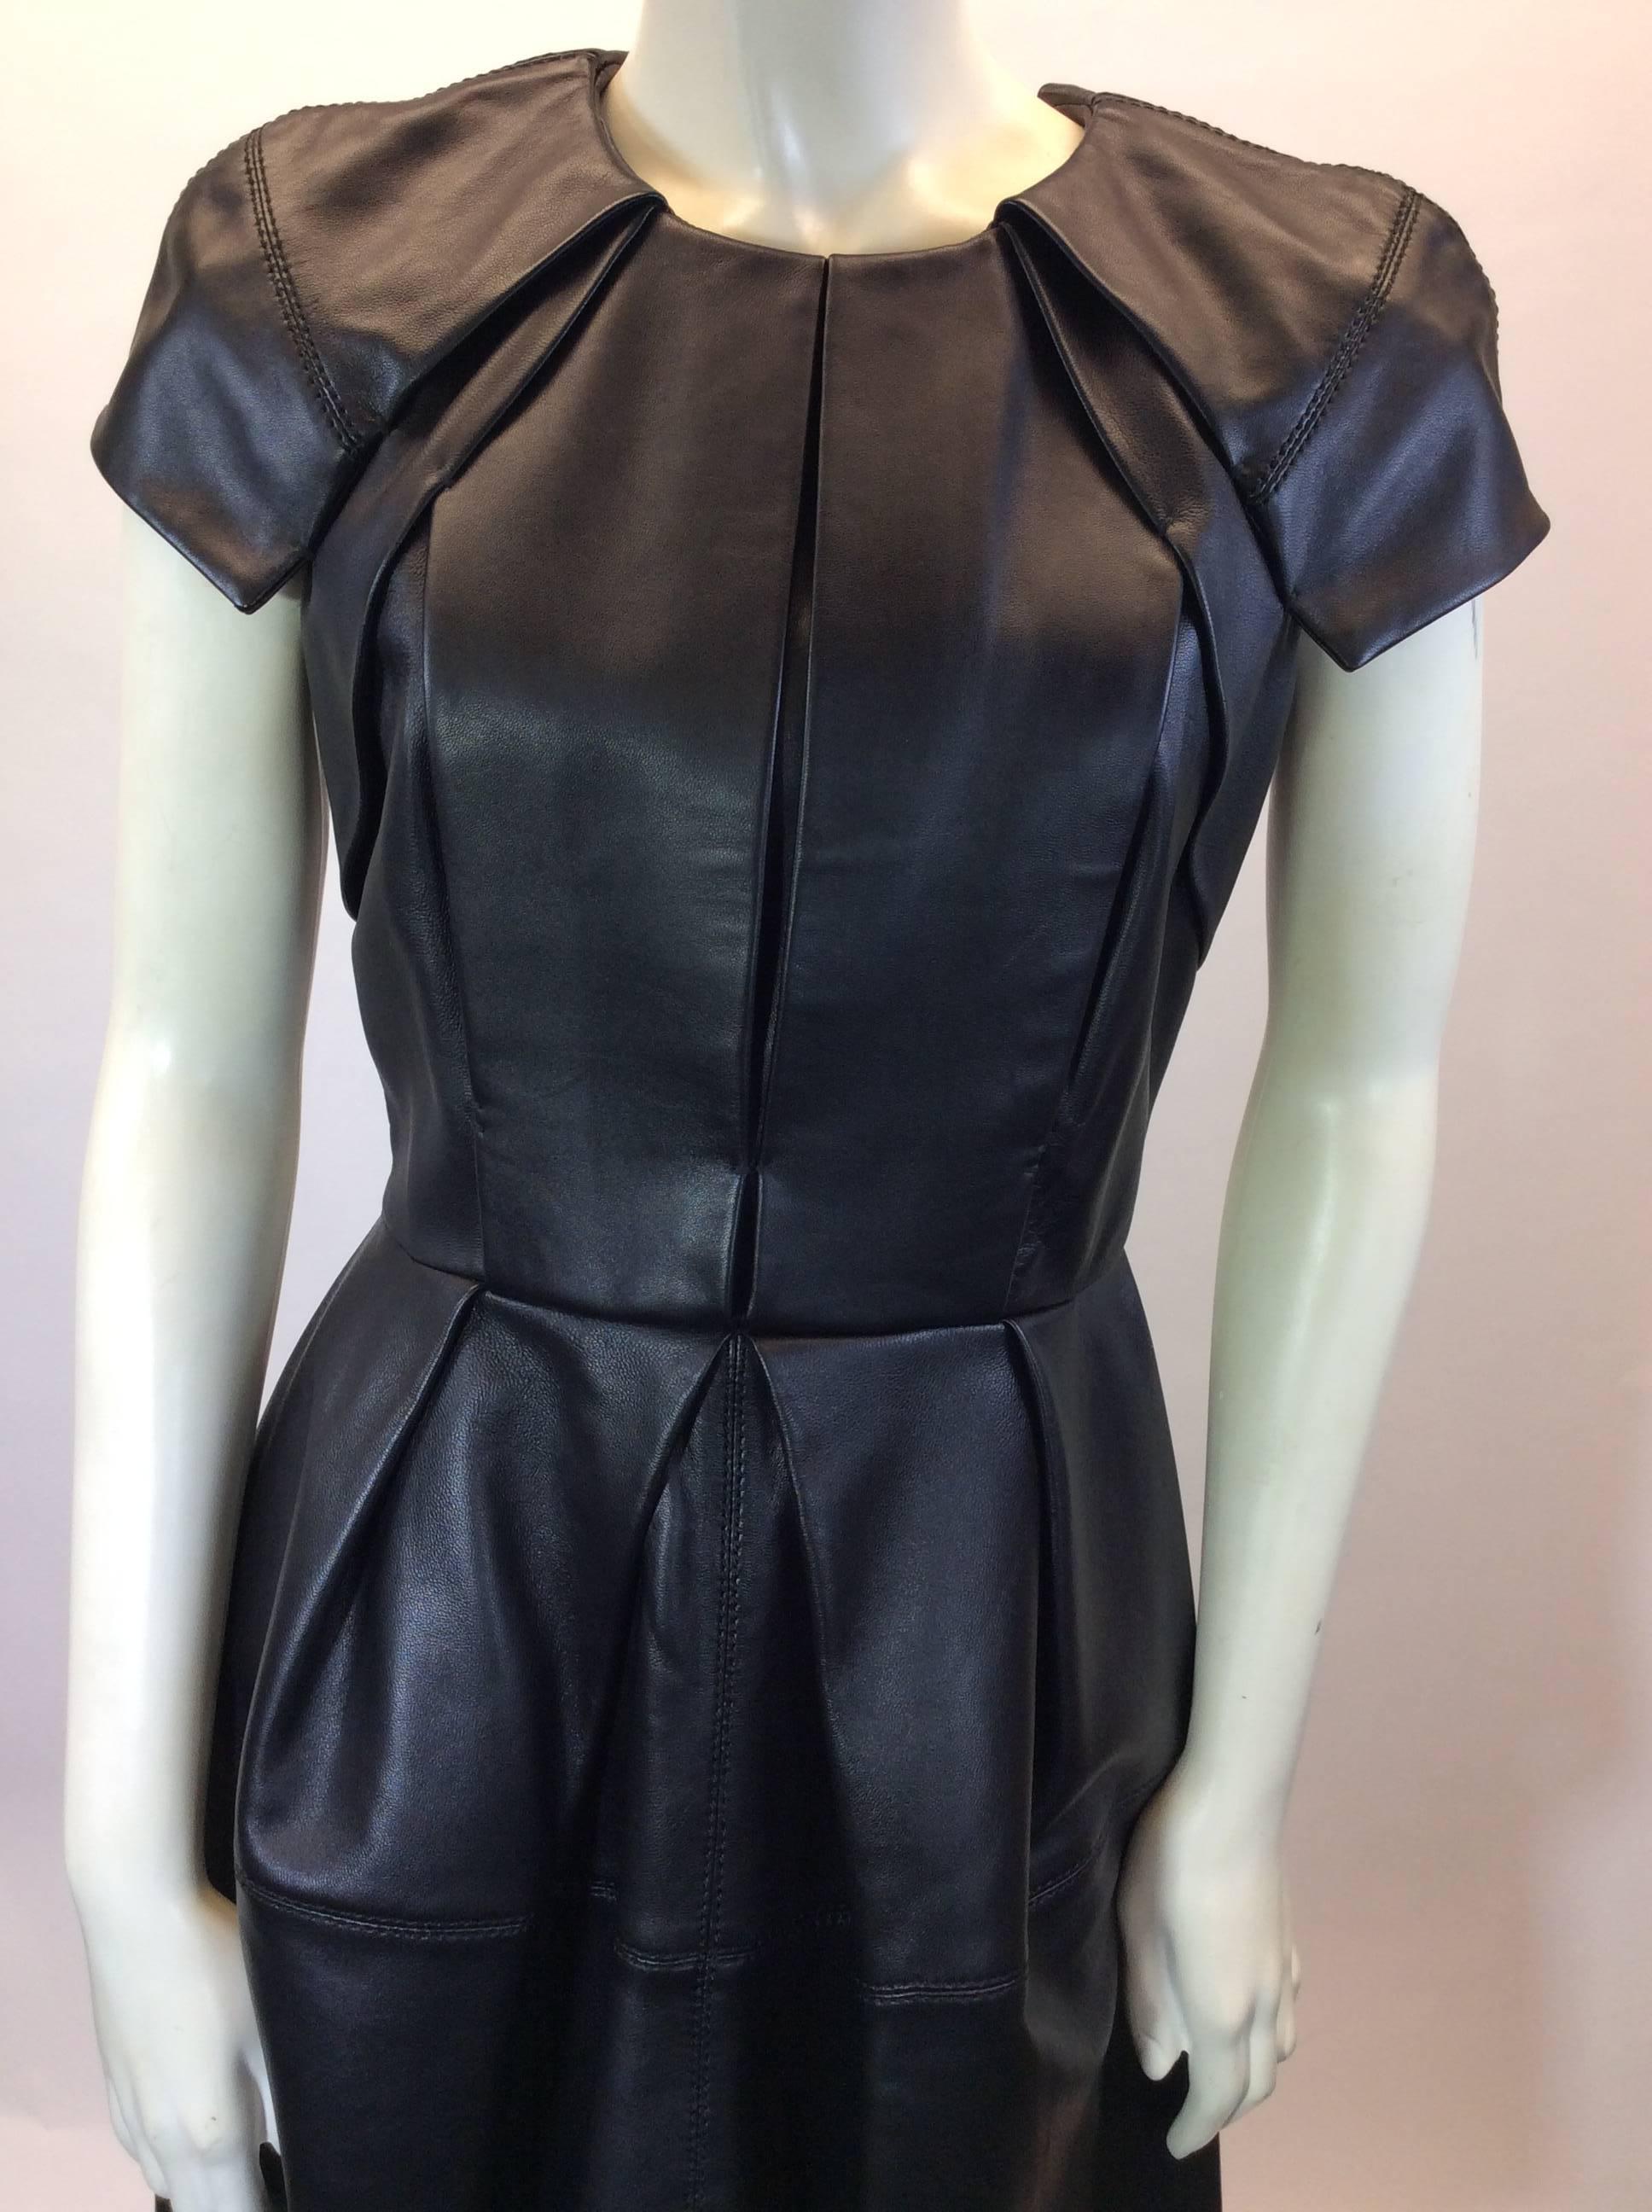 Dice Kayek Black Leather  Structured Dress  For Sale 2